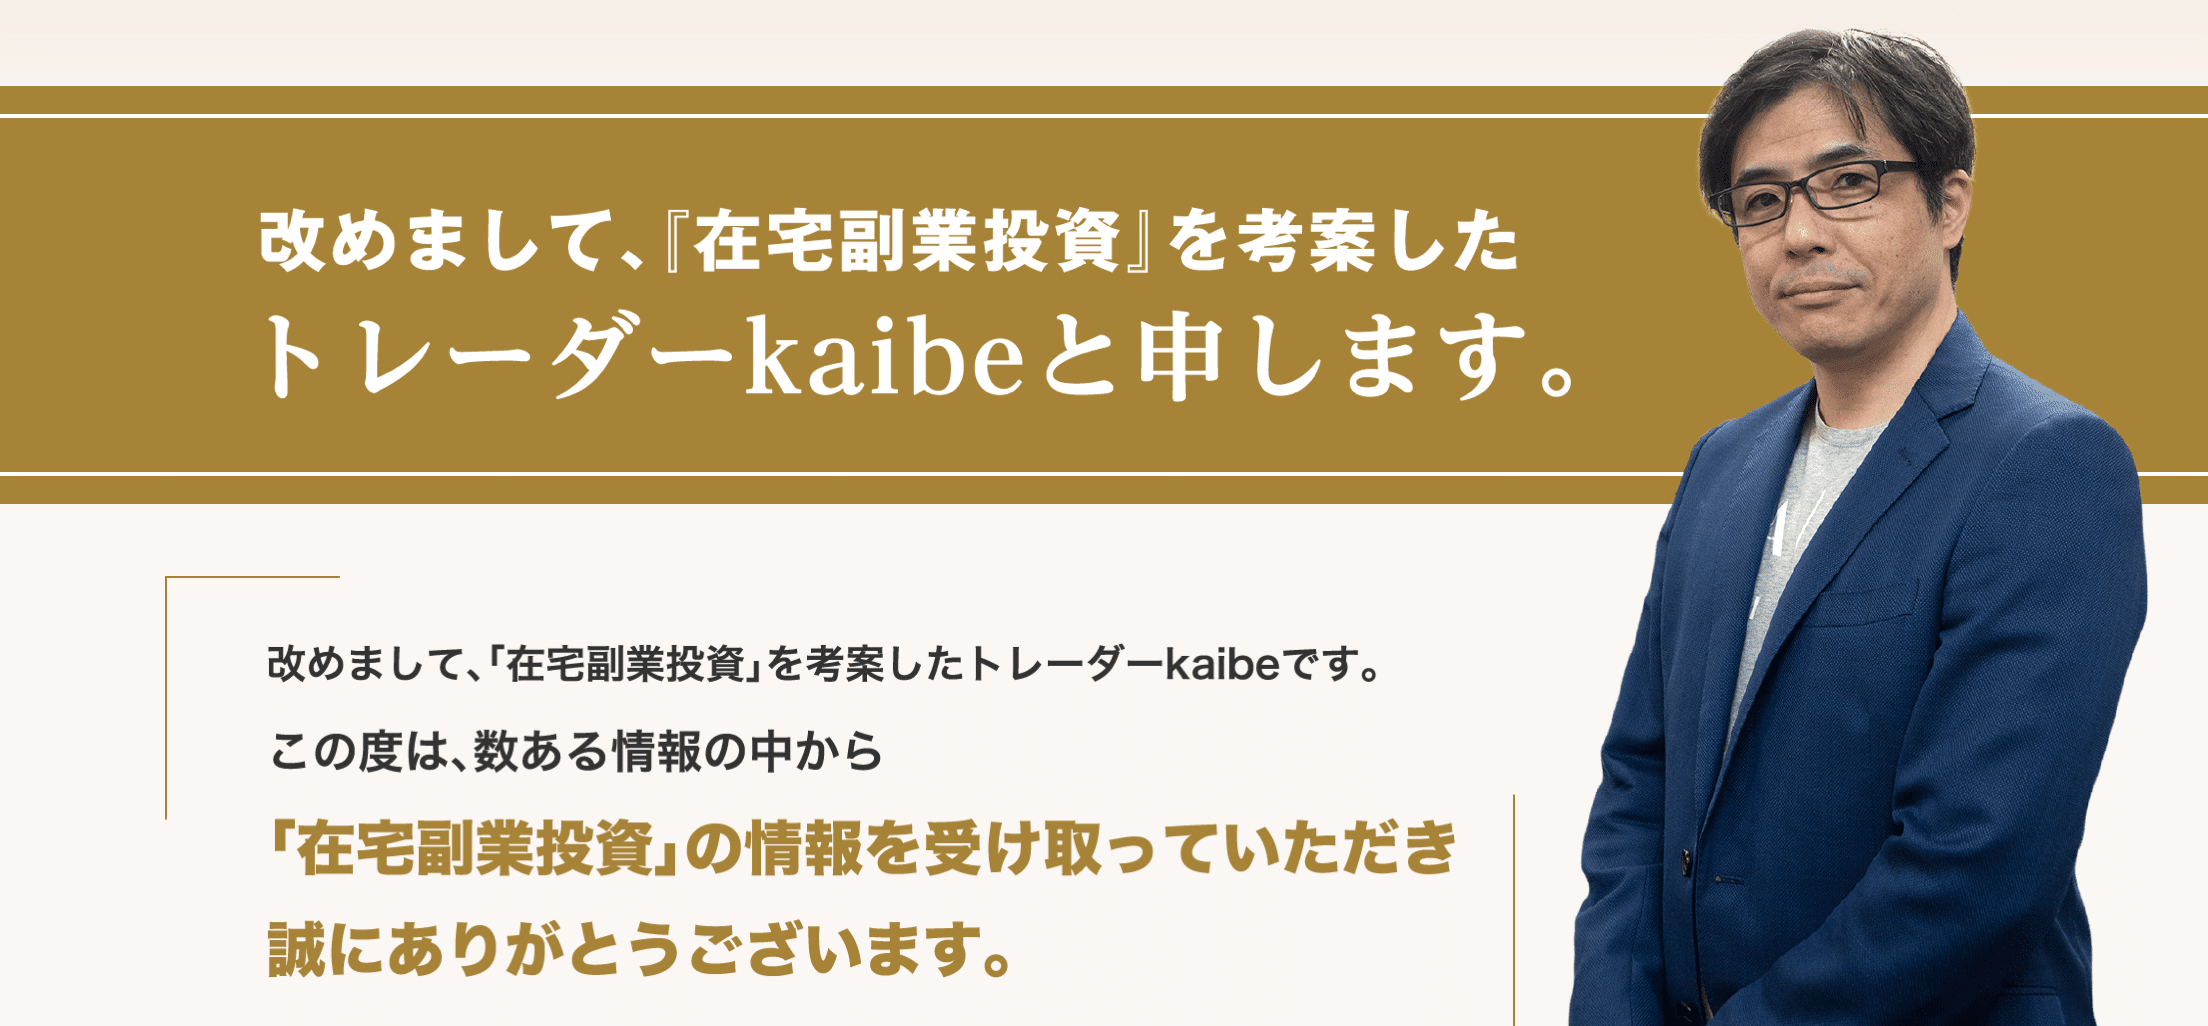 kaibe 在宅副業投資